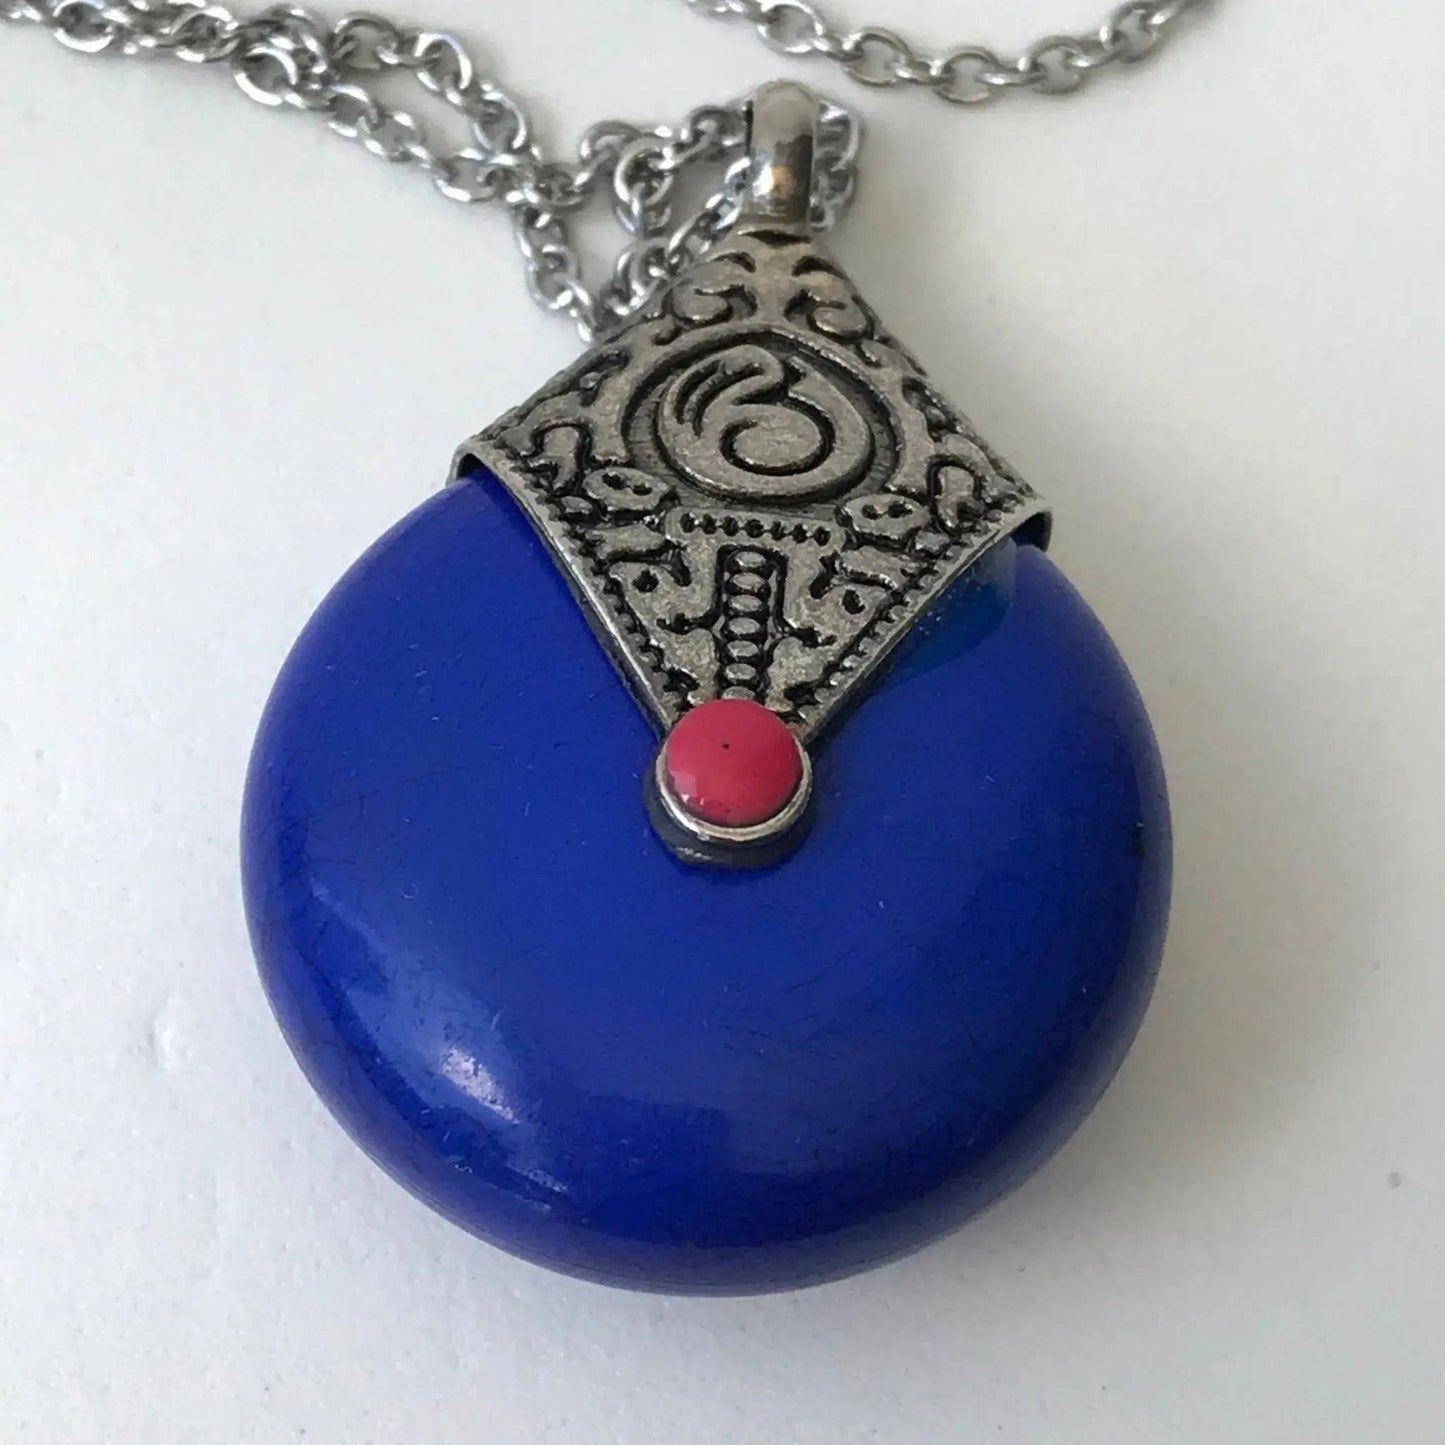 Tibetan Teardrop Pendant Necklace - Uplift Beads